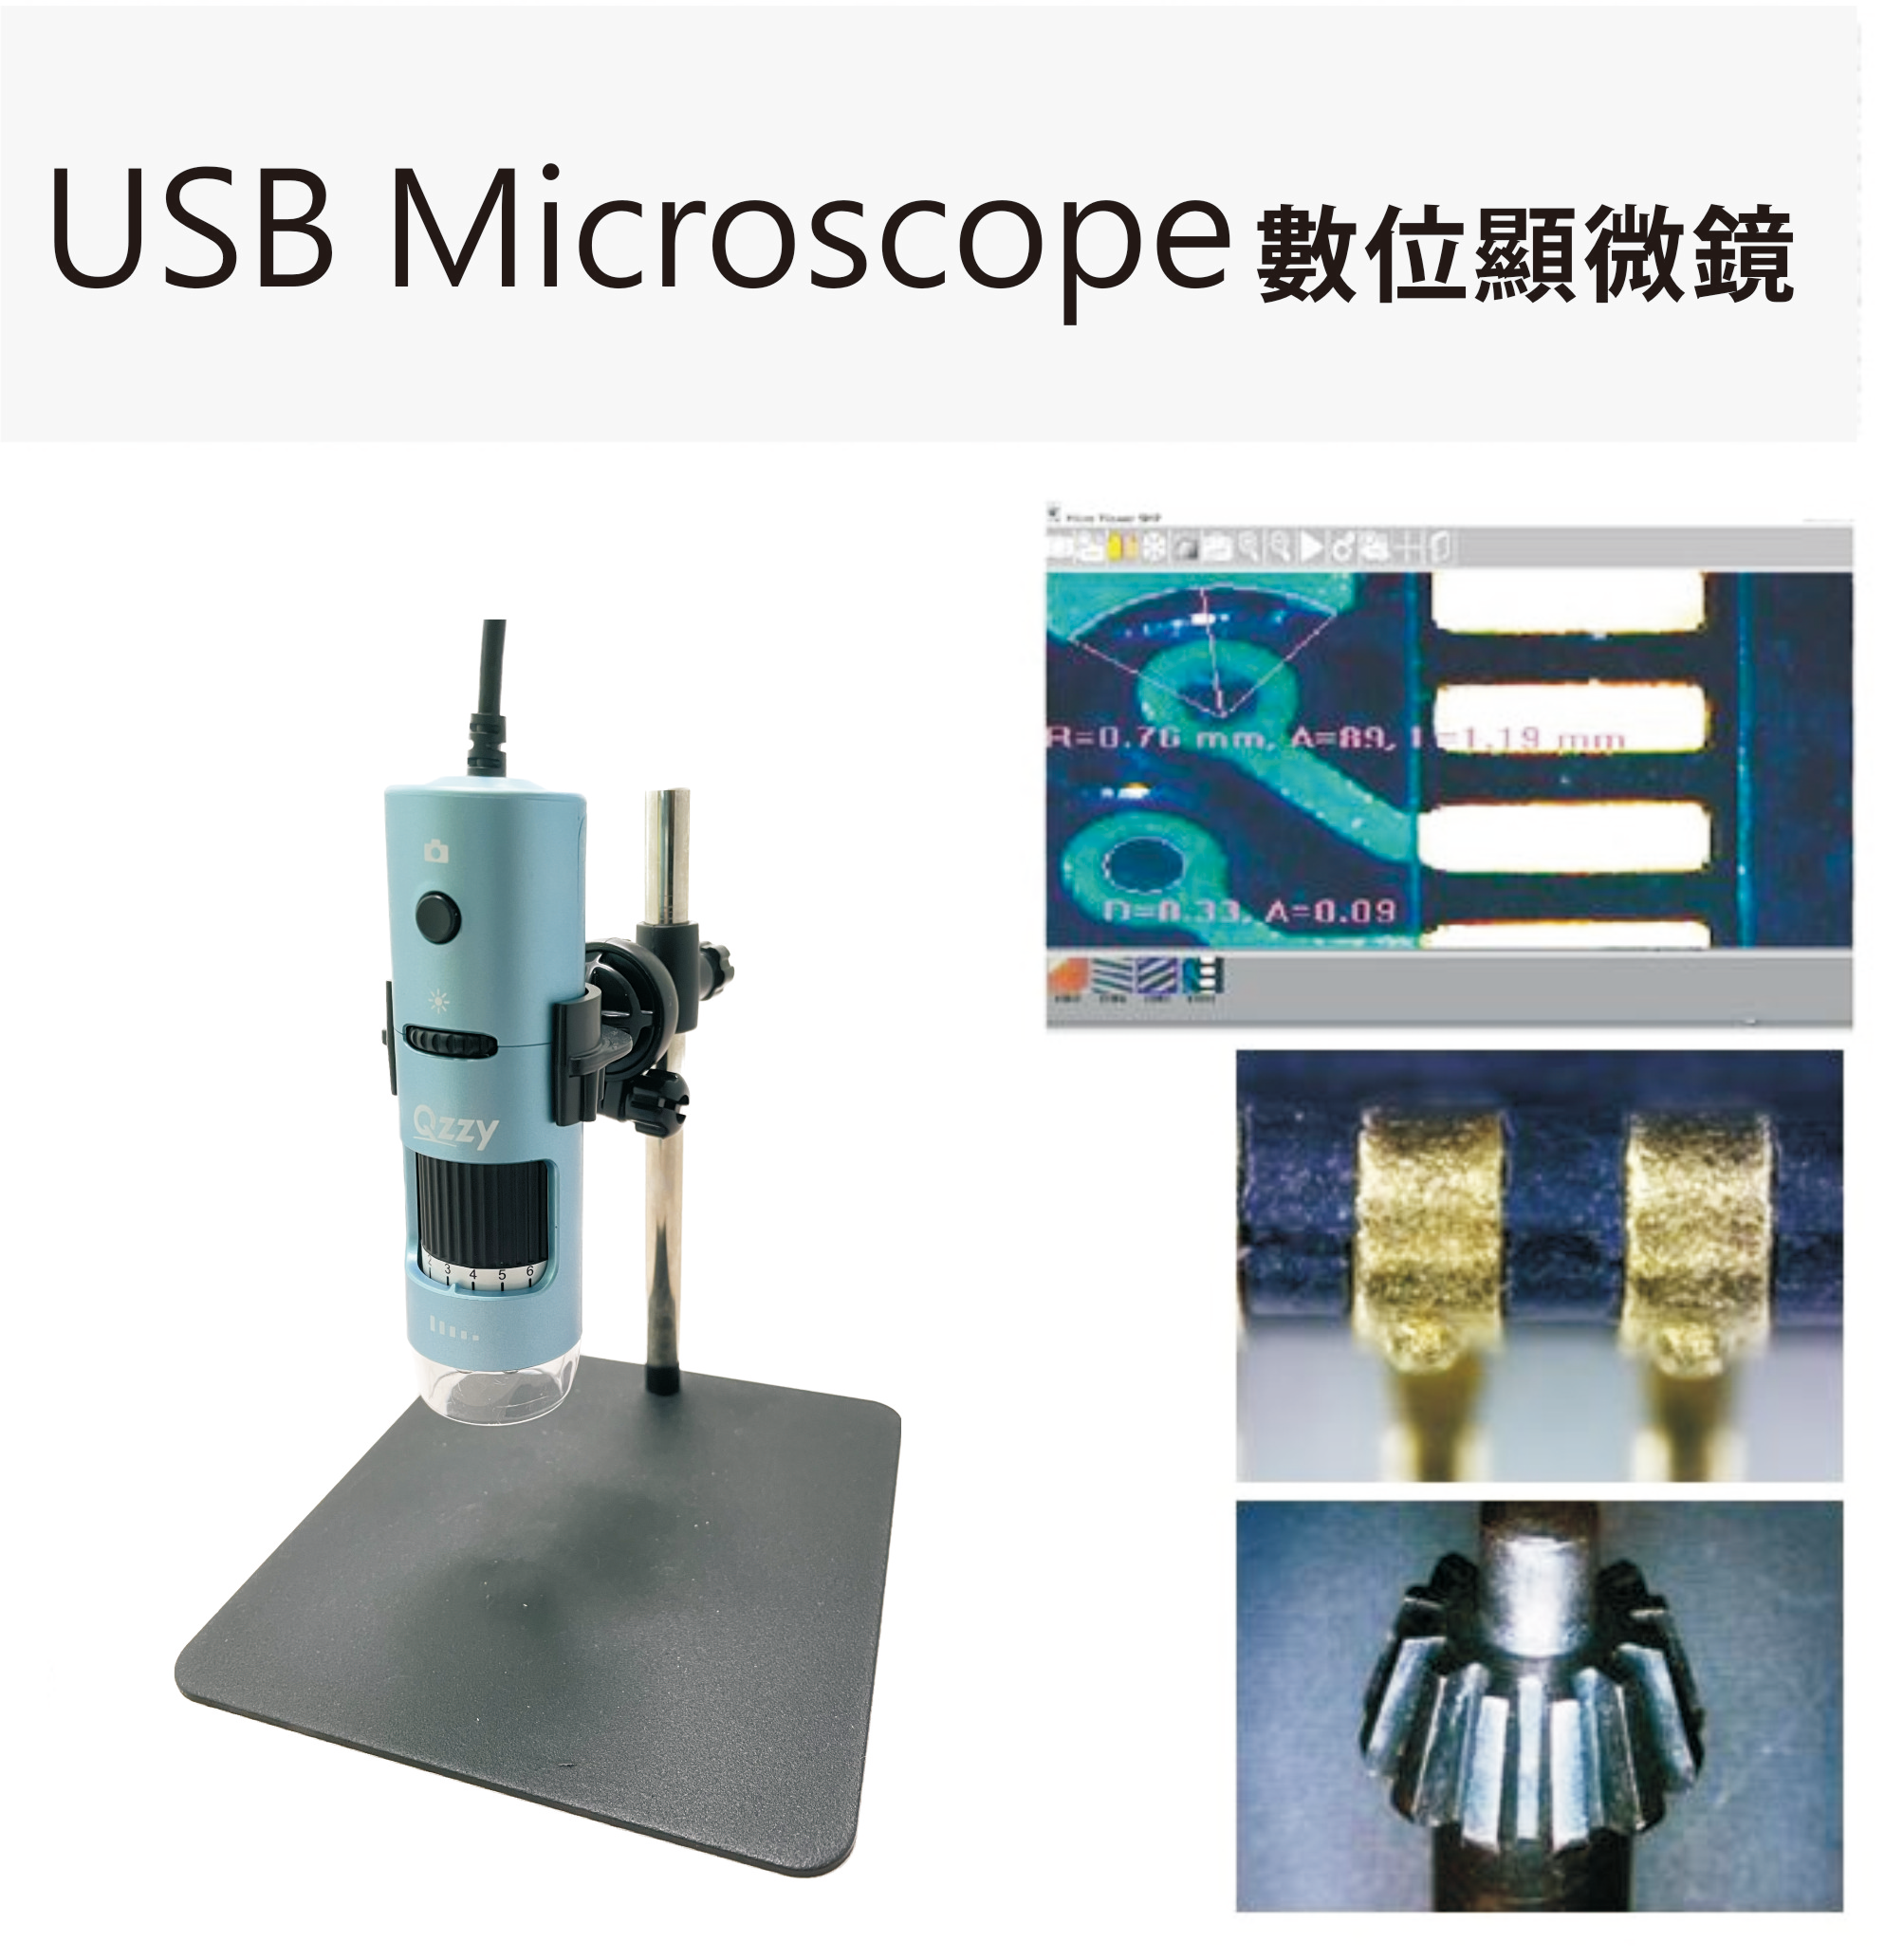 5M USB Microscope (200X)